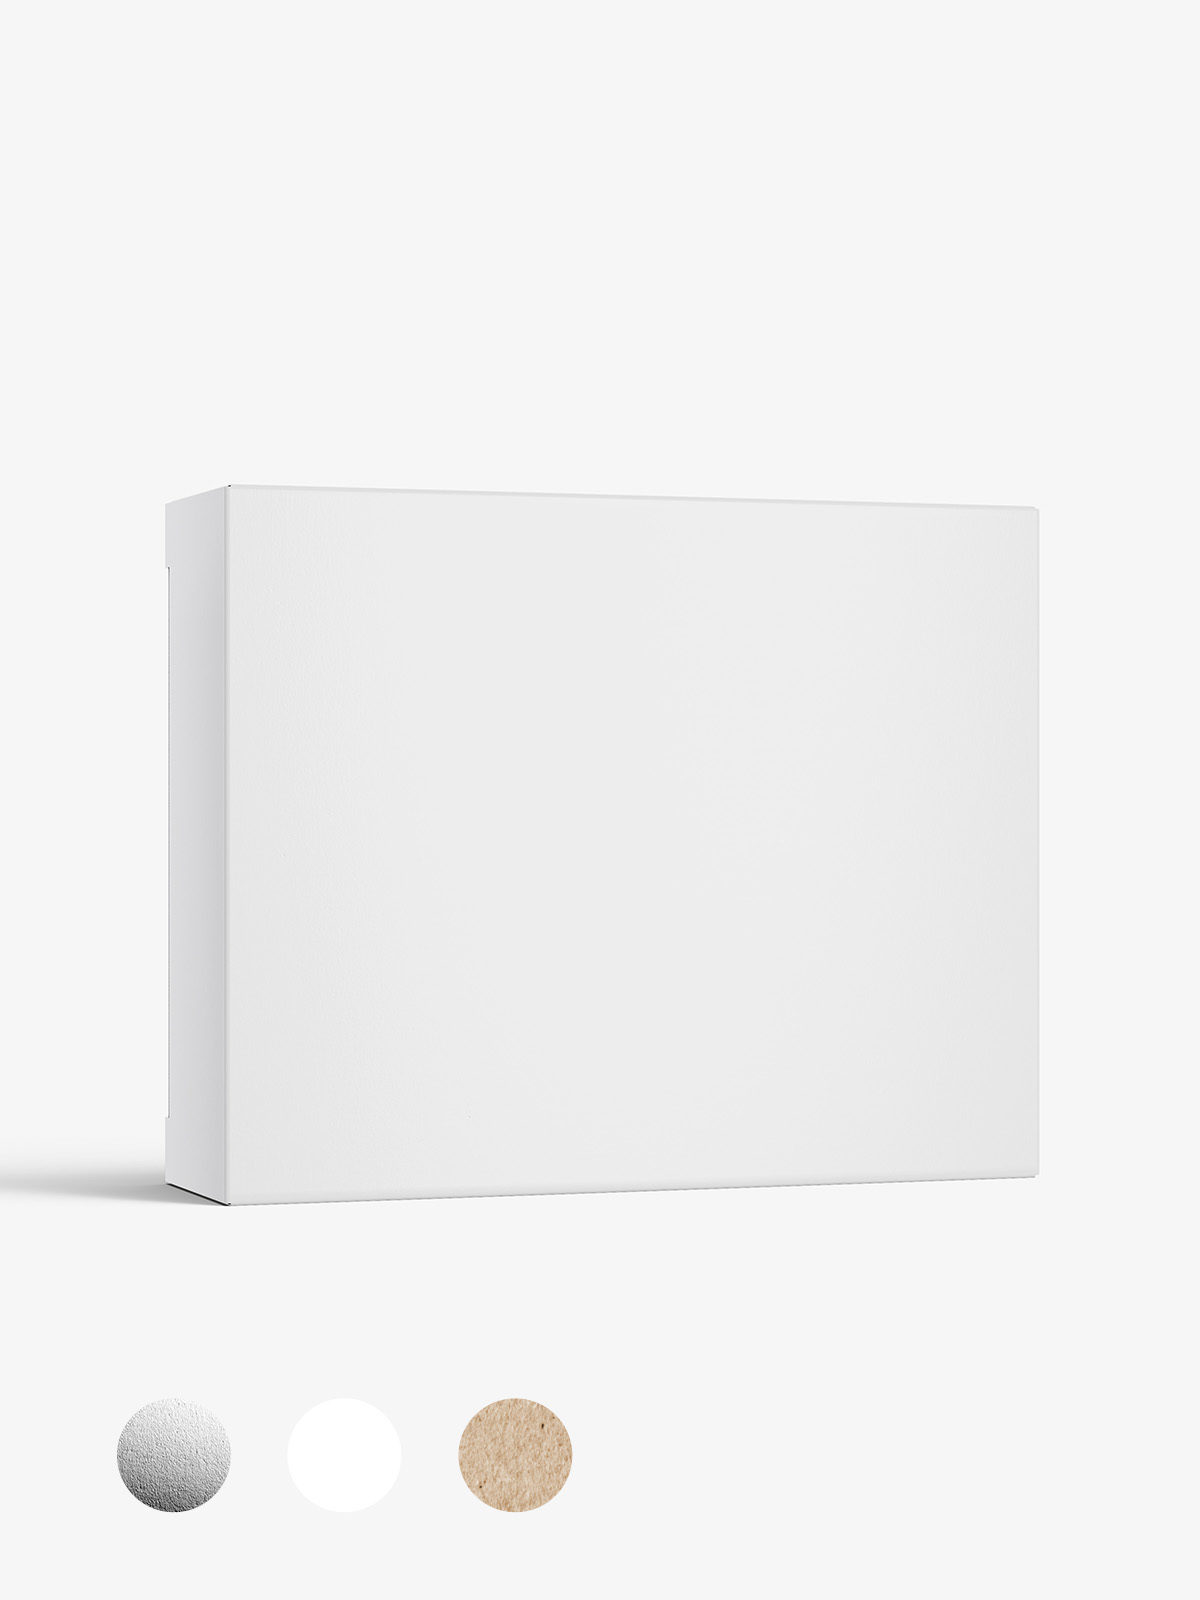 Download Box mockup / 100x80x28 mm / white - metallic - kraft - Smarty Mockups